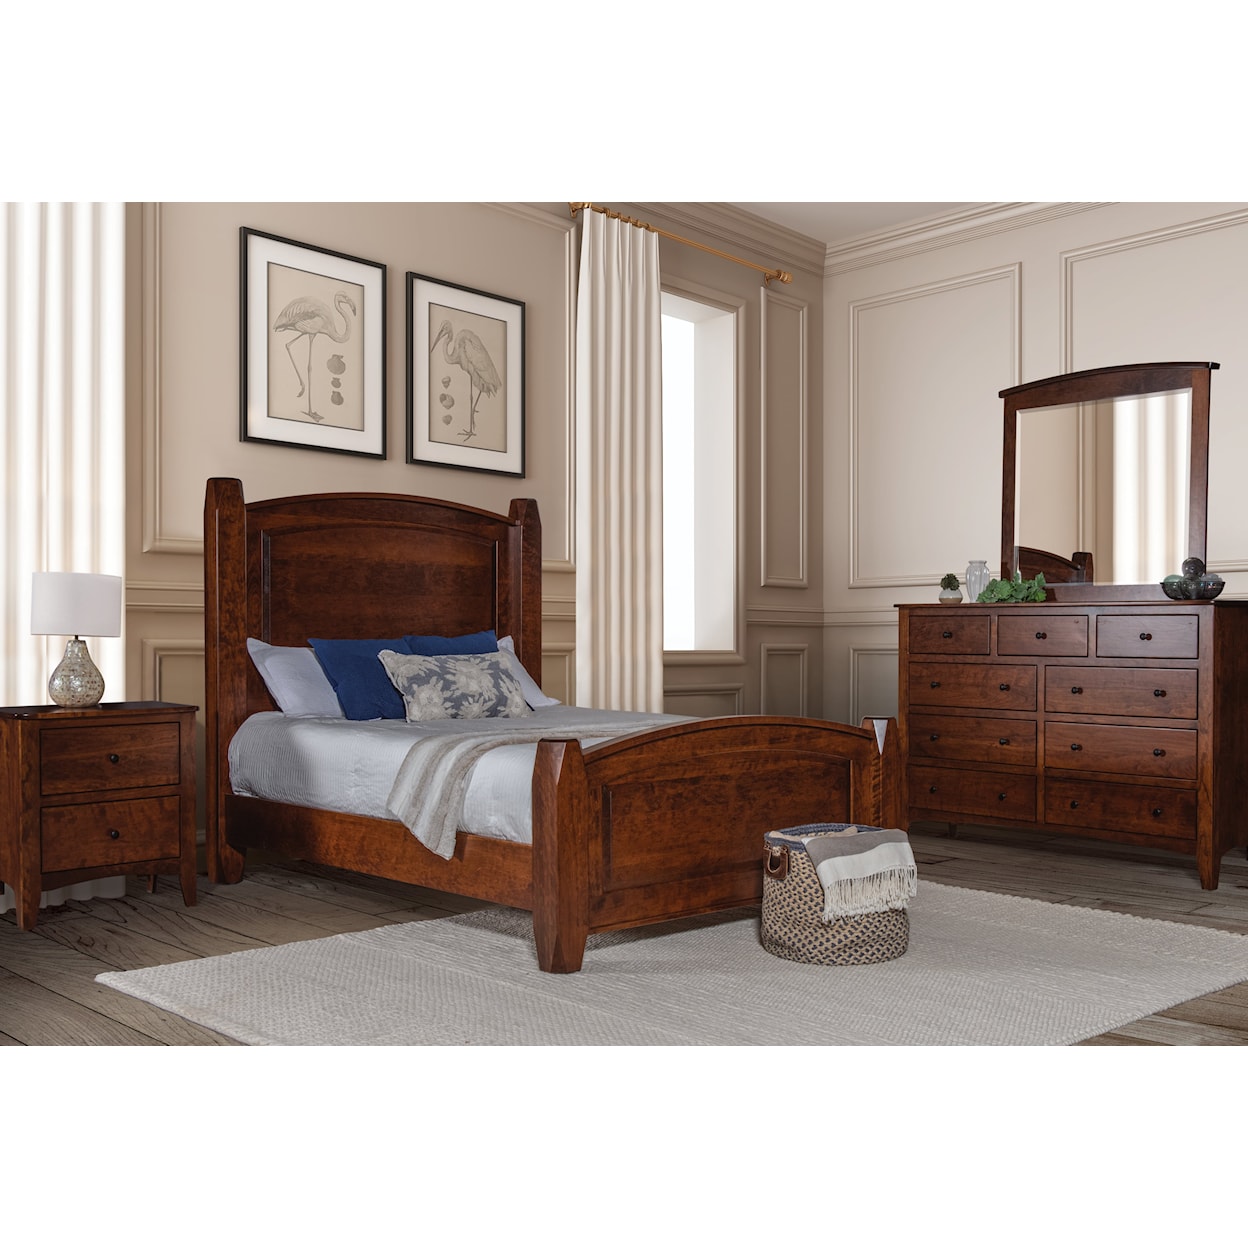 Archbold Furniture Bob Timberlake 9-Drawer Dresser